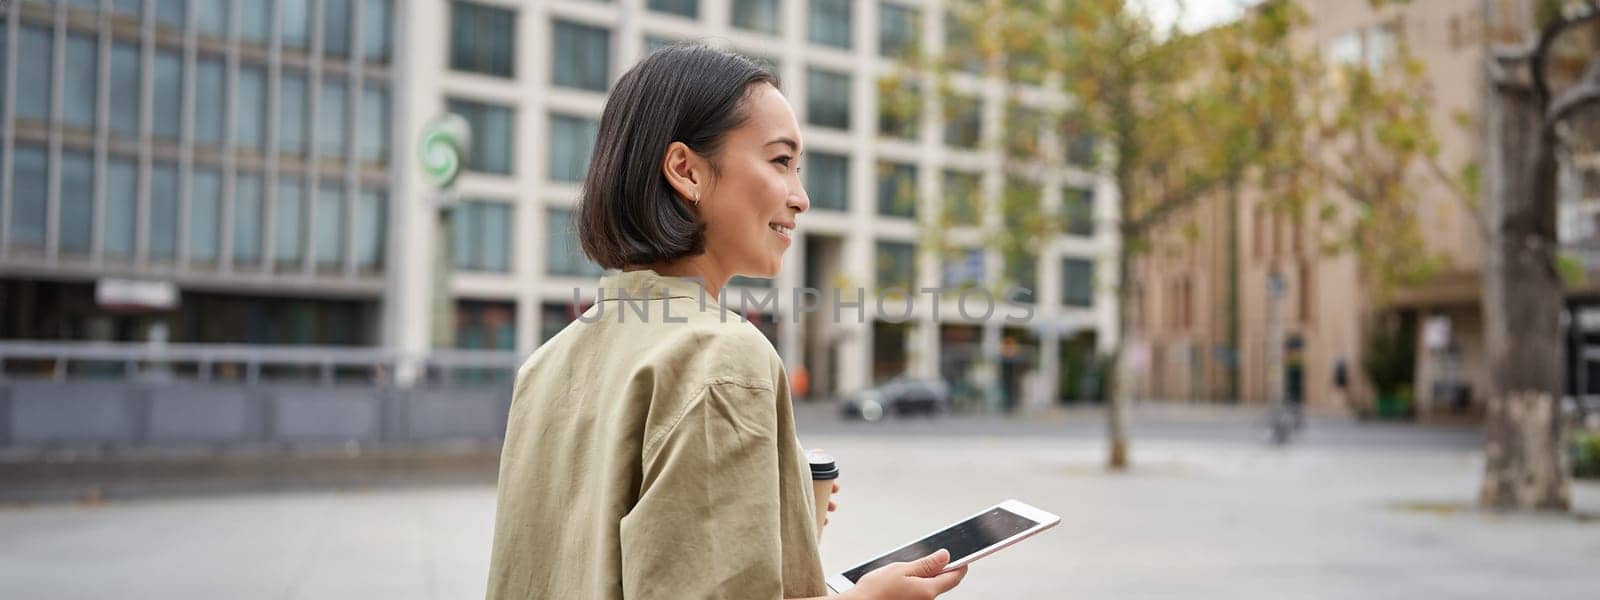 Portrait of stylish urban girl walks in city with tablet, drinks takeaway coffee.